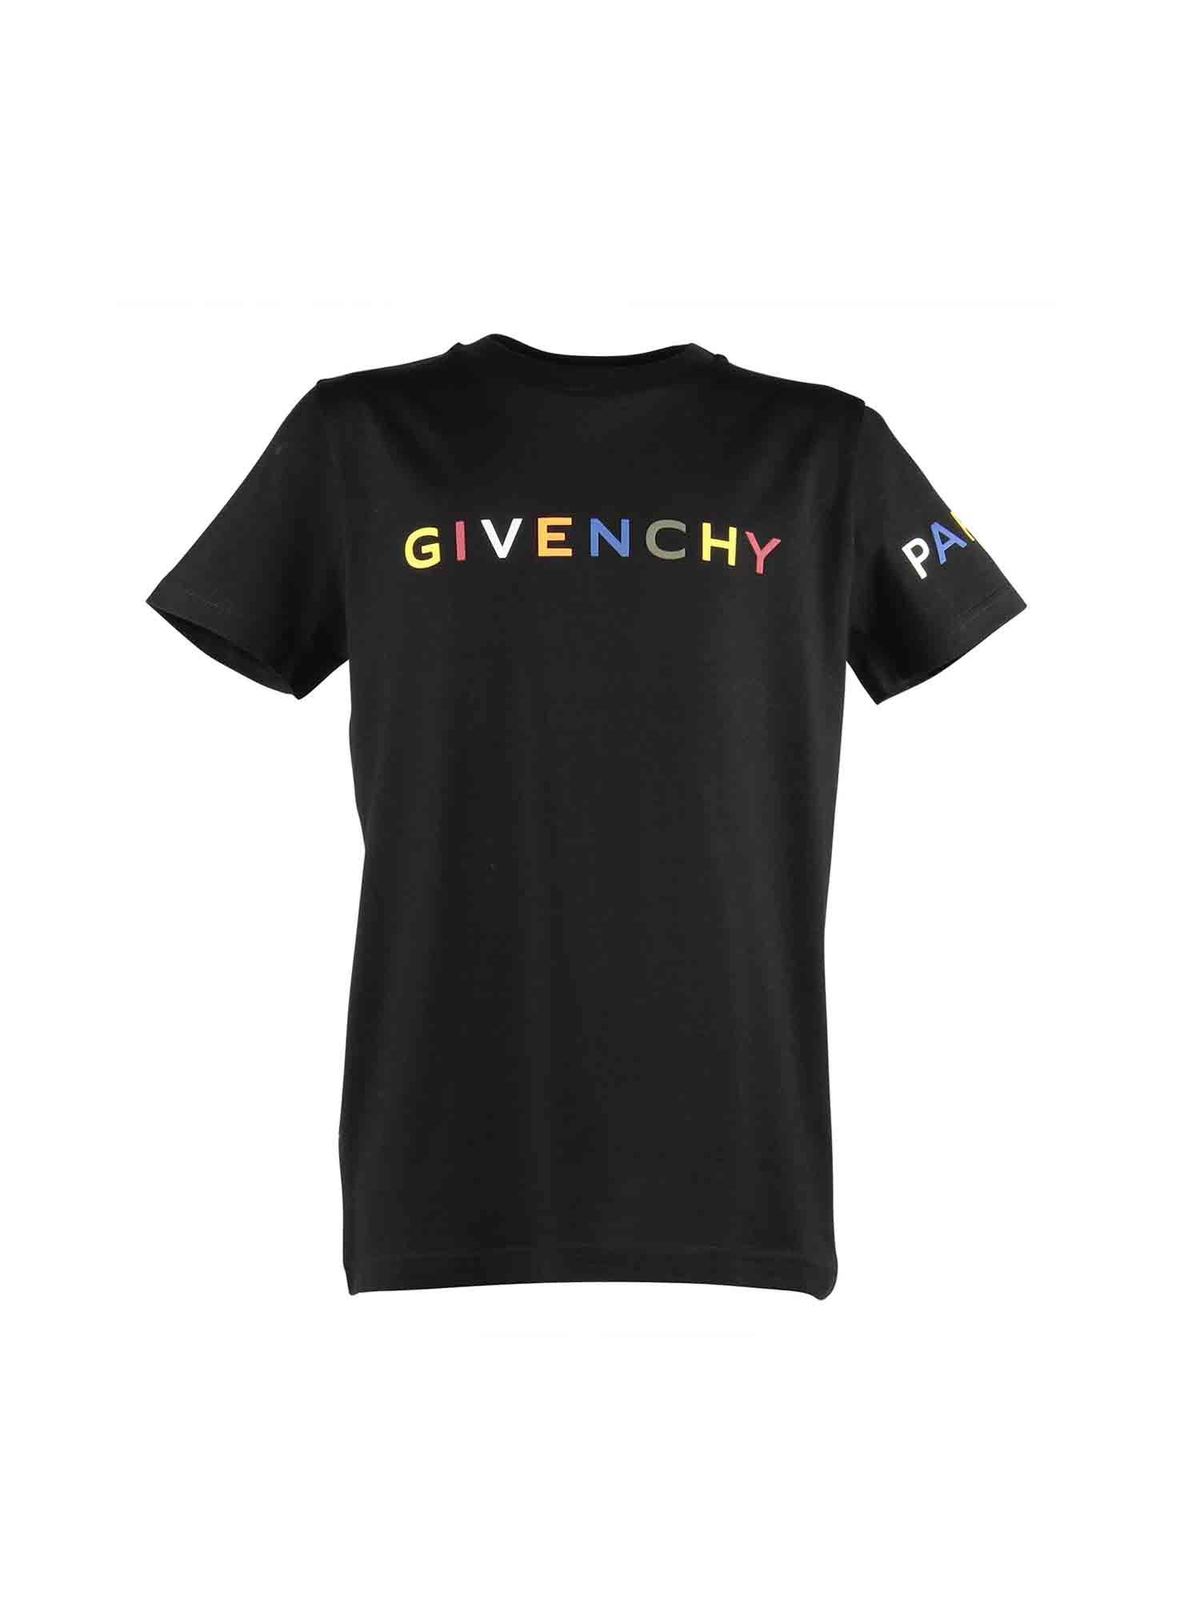 Givenchy - Camiseta - Negro - Camisetas - H2517709B | iKRIX tienda online